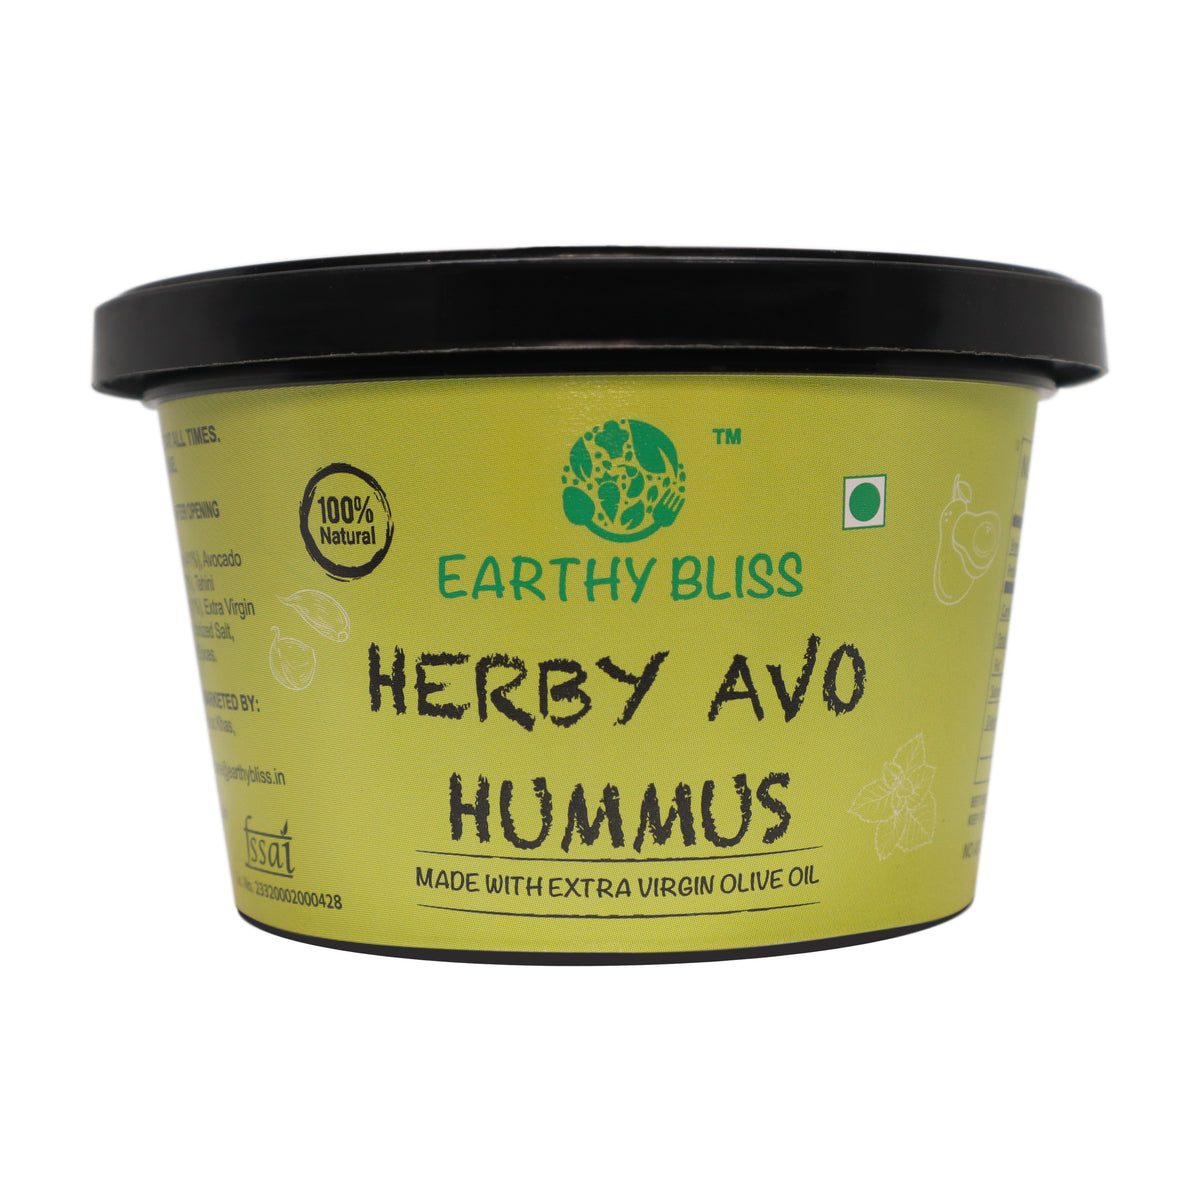 Herby Avo Hummus - Earthy Bliss